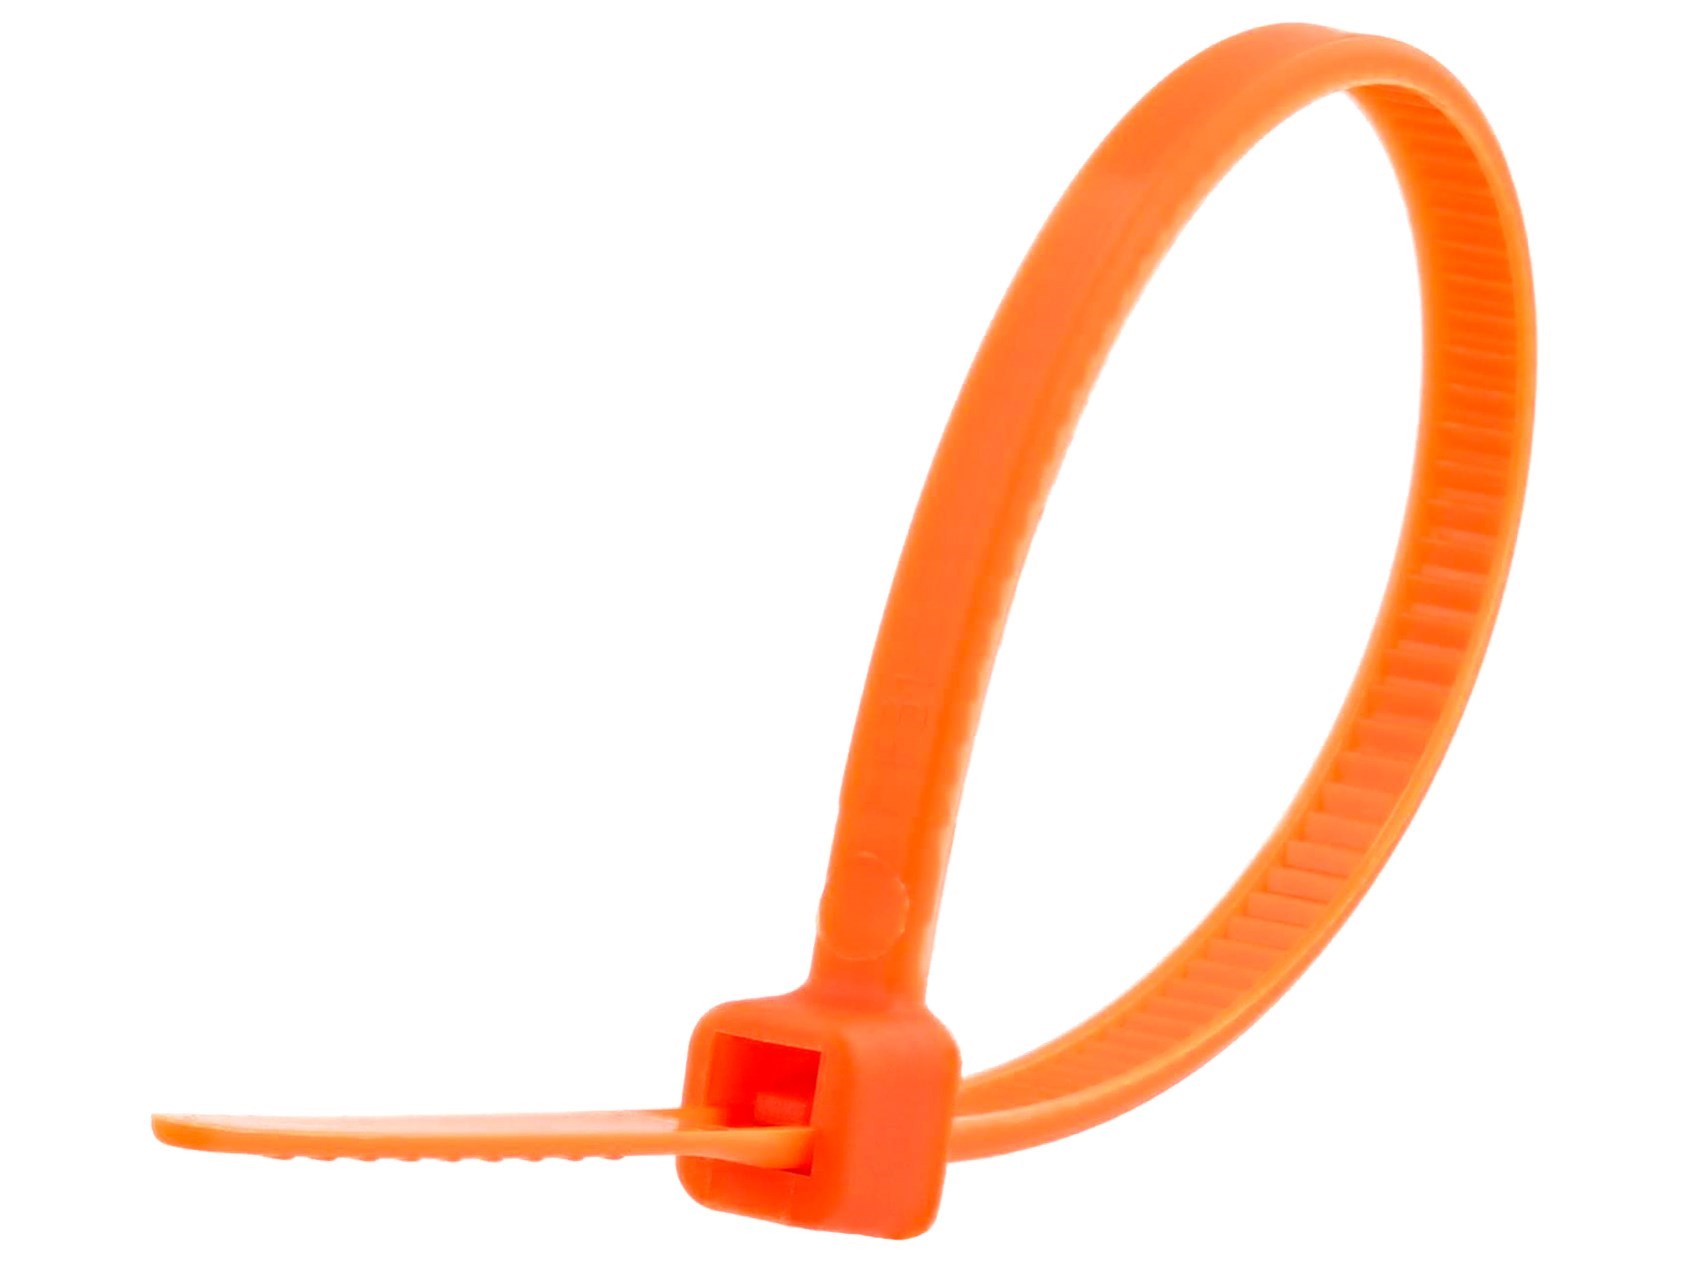 Cable Ties Orange 4" Nylon Tie  Bundle Tie Zip Tie Cable Tie  100  Pack 